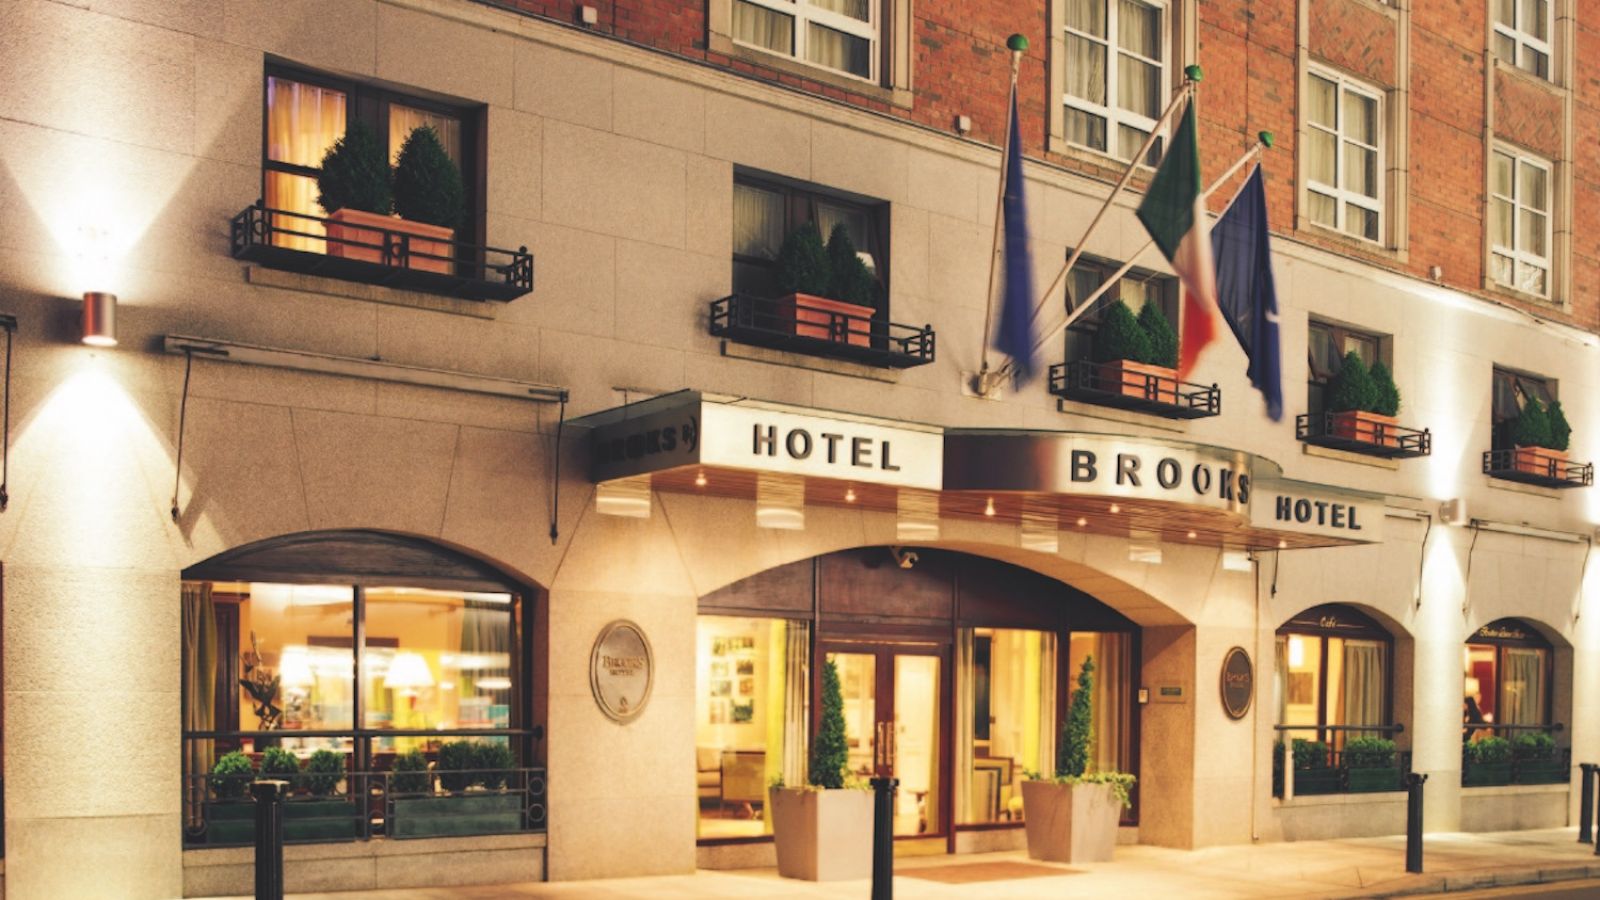 Brooks Hotel - Dublin